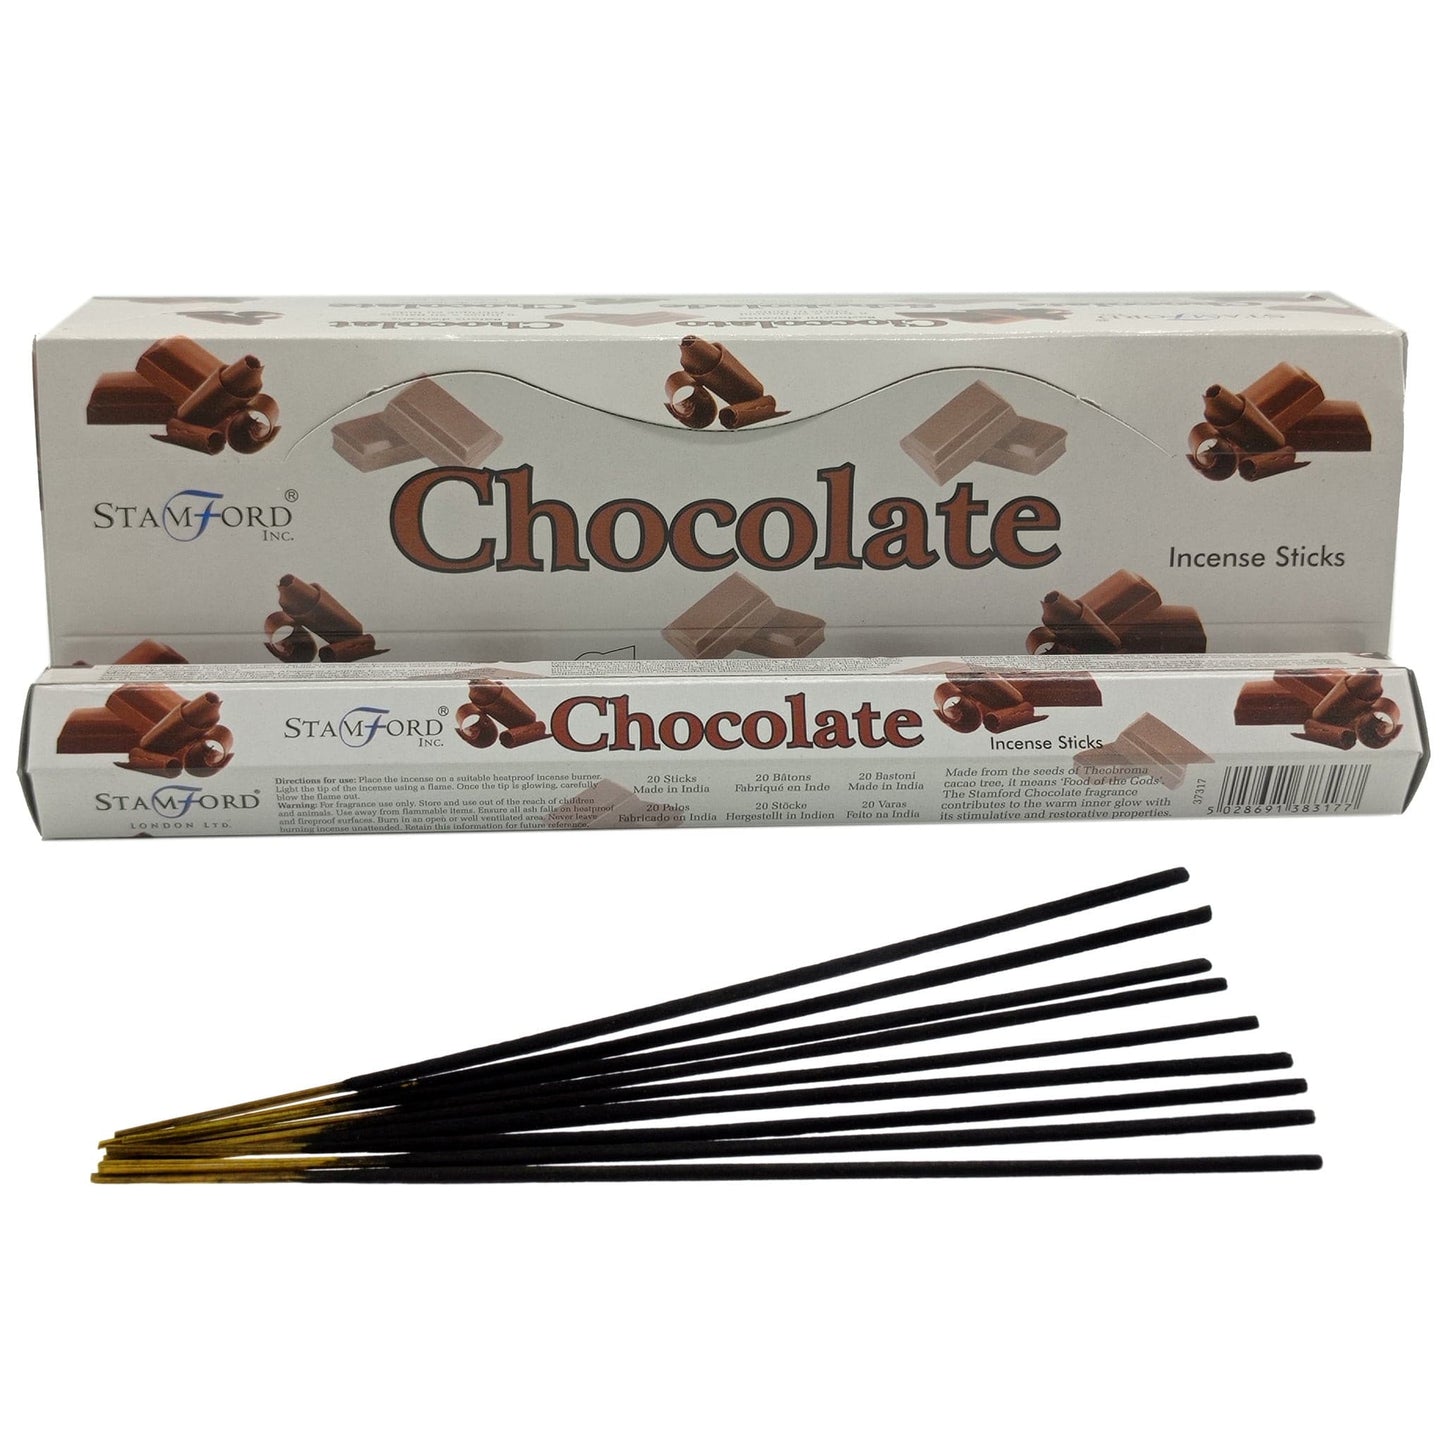 Stamford Chocolate Incense Sticks.